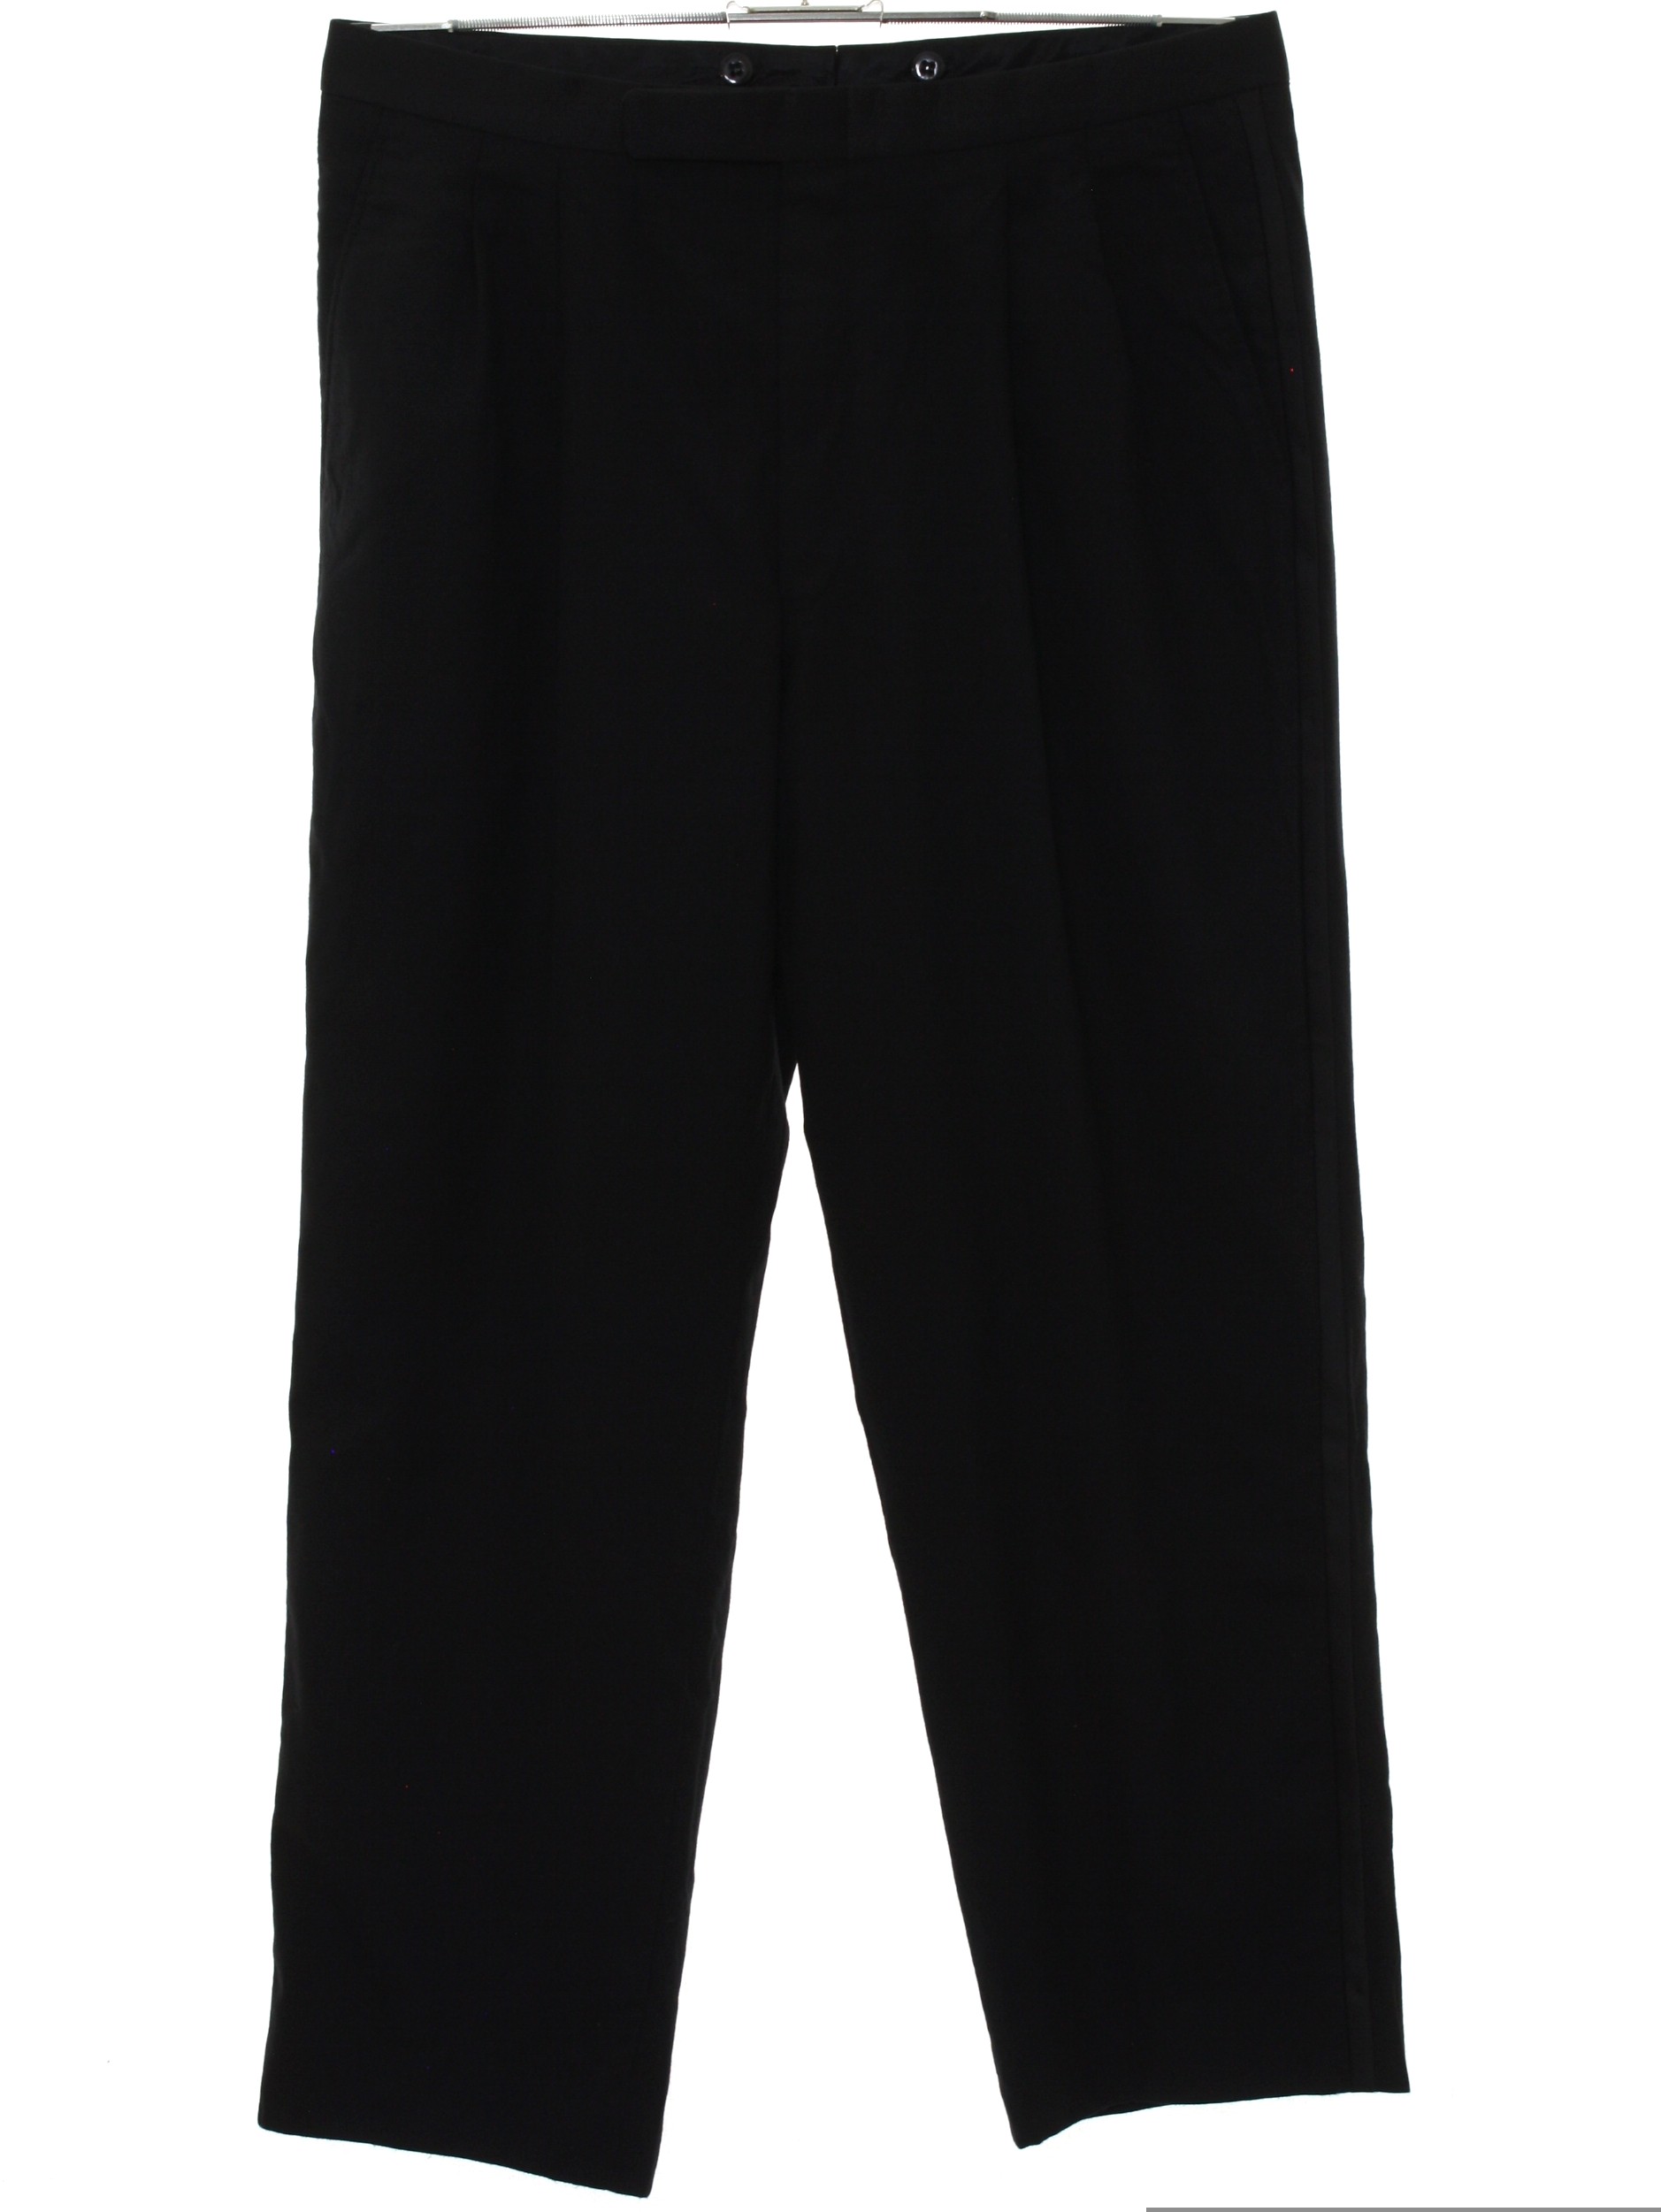 Retro Eighties Pants: 80s -Missing Label- Mens black solid colored wool ...